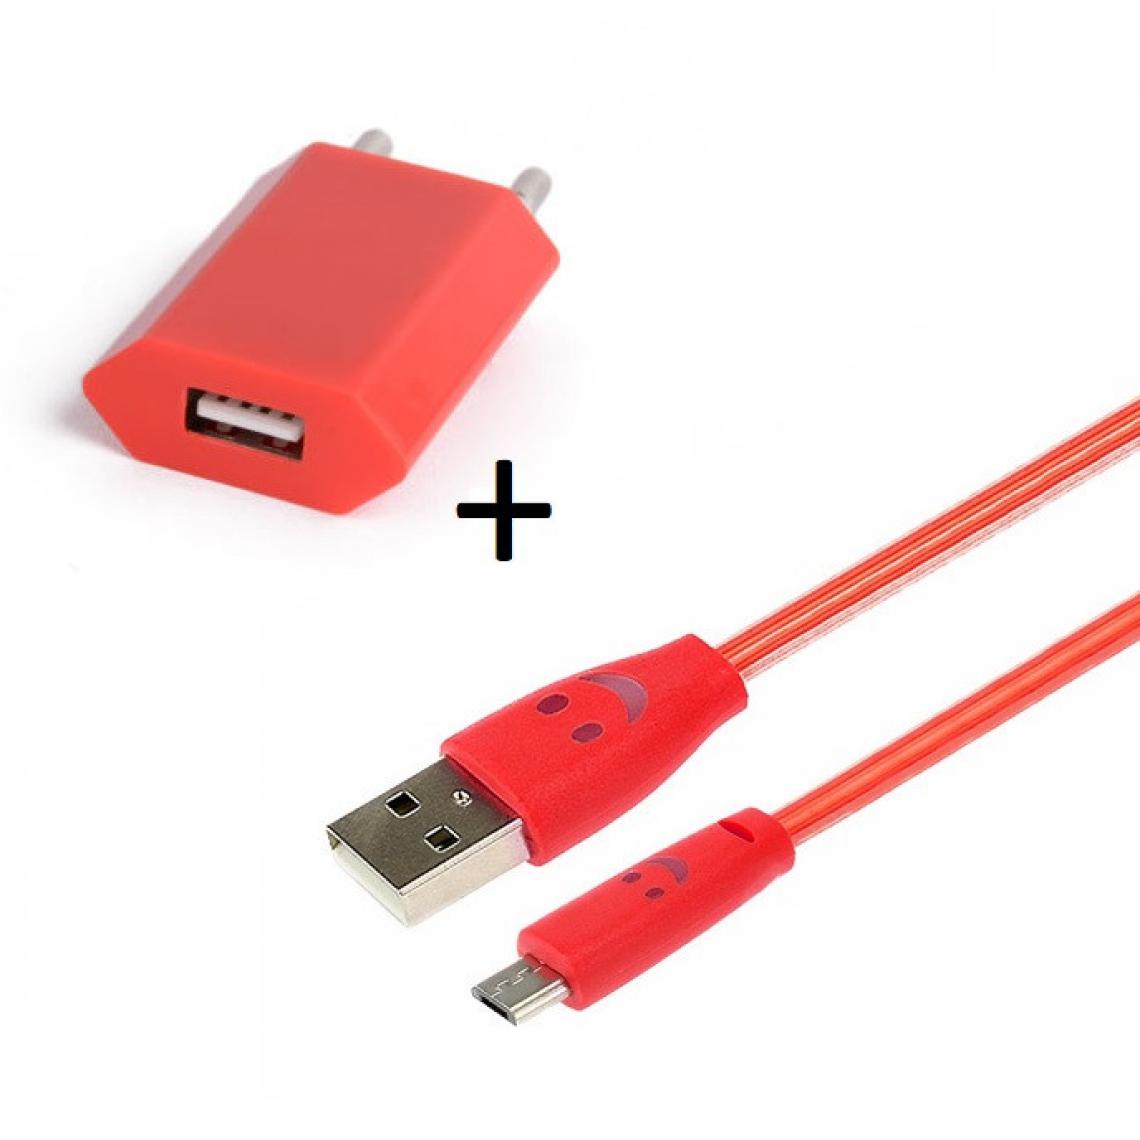 Shot - Pack Chargeur pour WIKO Y80 Smartphone Micro USB (Cable Smiley LED + Prise Secteur USB) Android (ROUGE) - Chargeur secteur téléphone